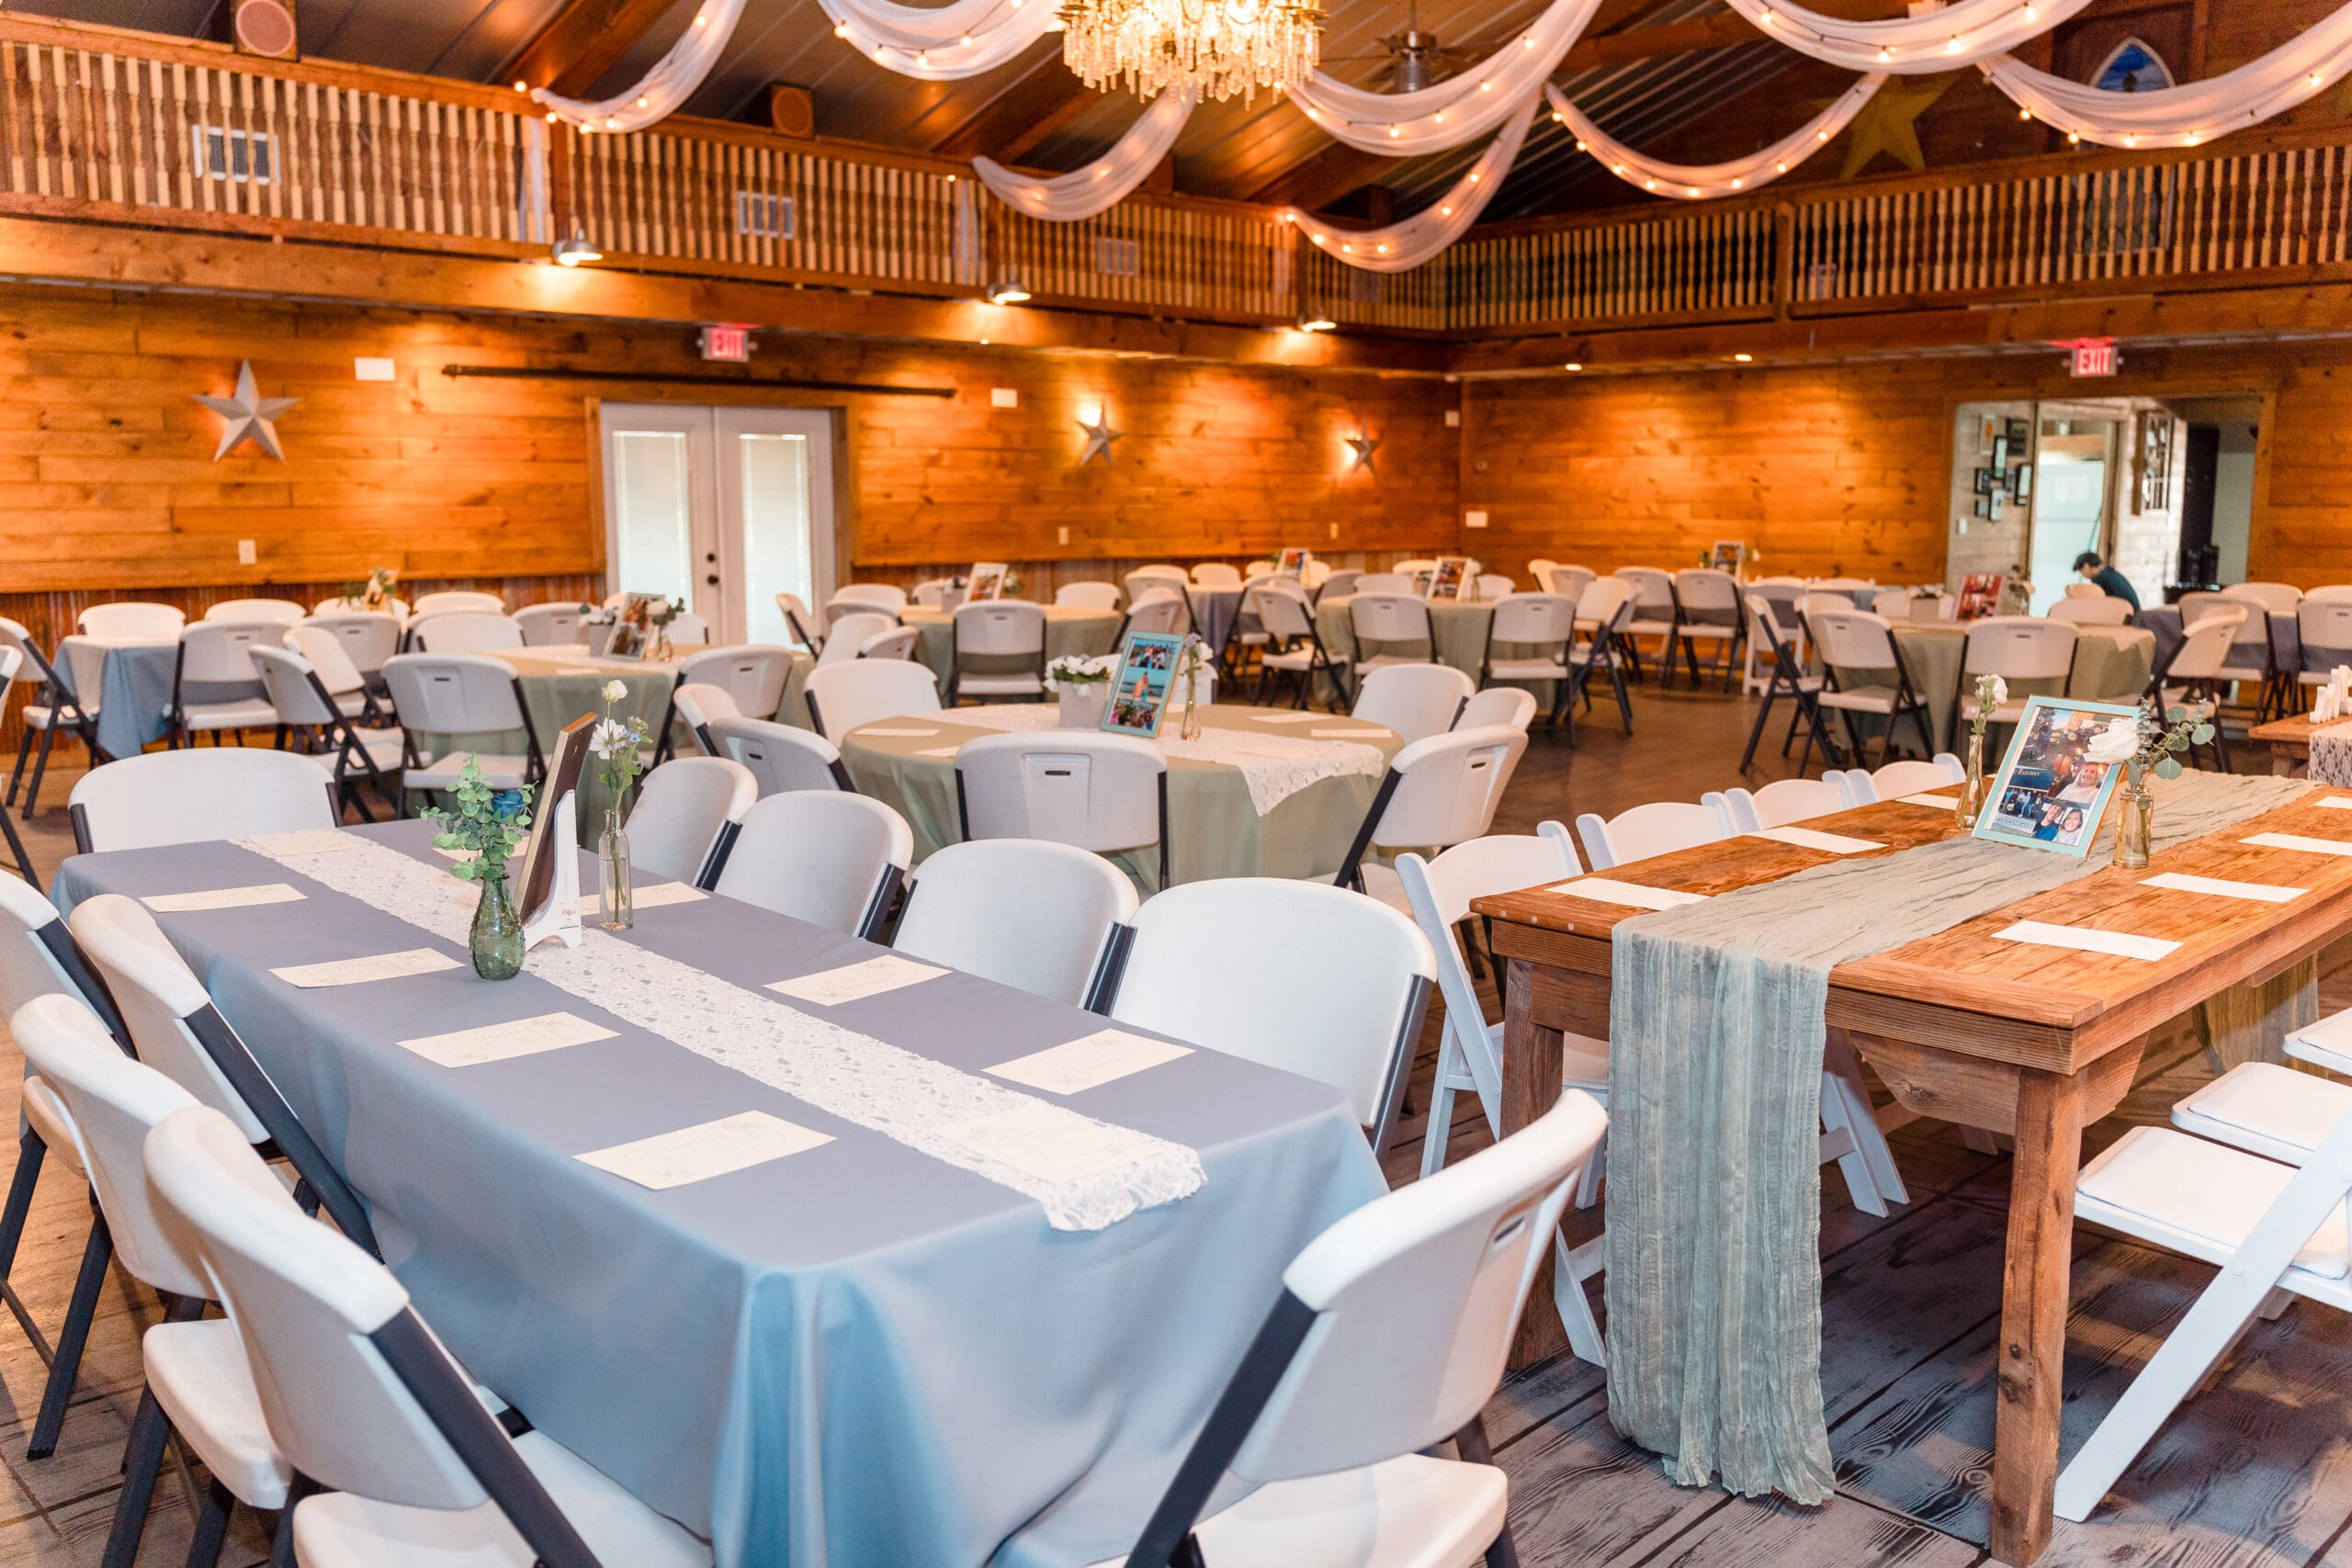 Tables set up at Hidden Barn reception center before Delisa and Preston's wedding reception